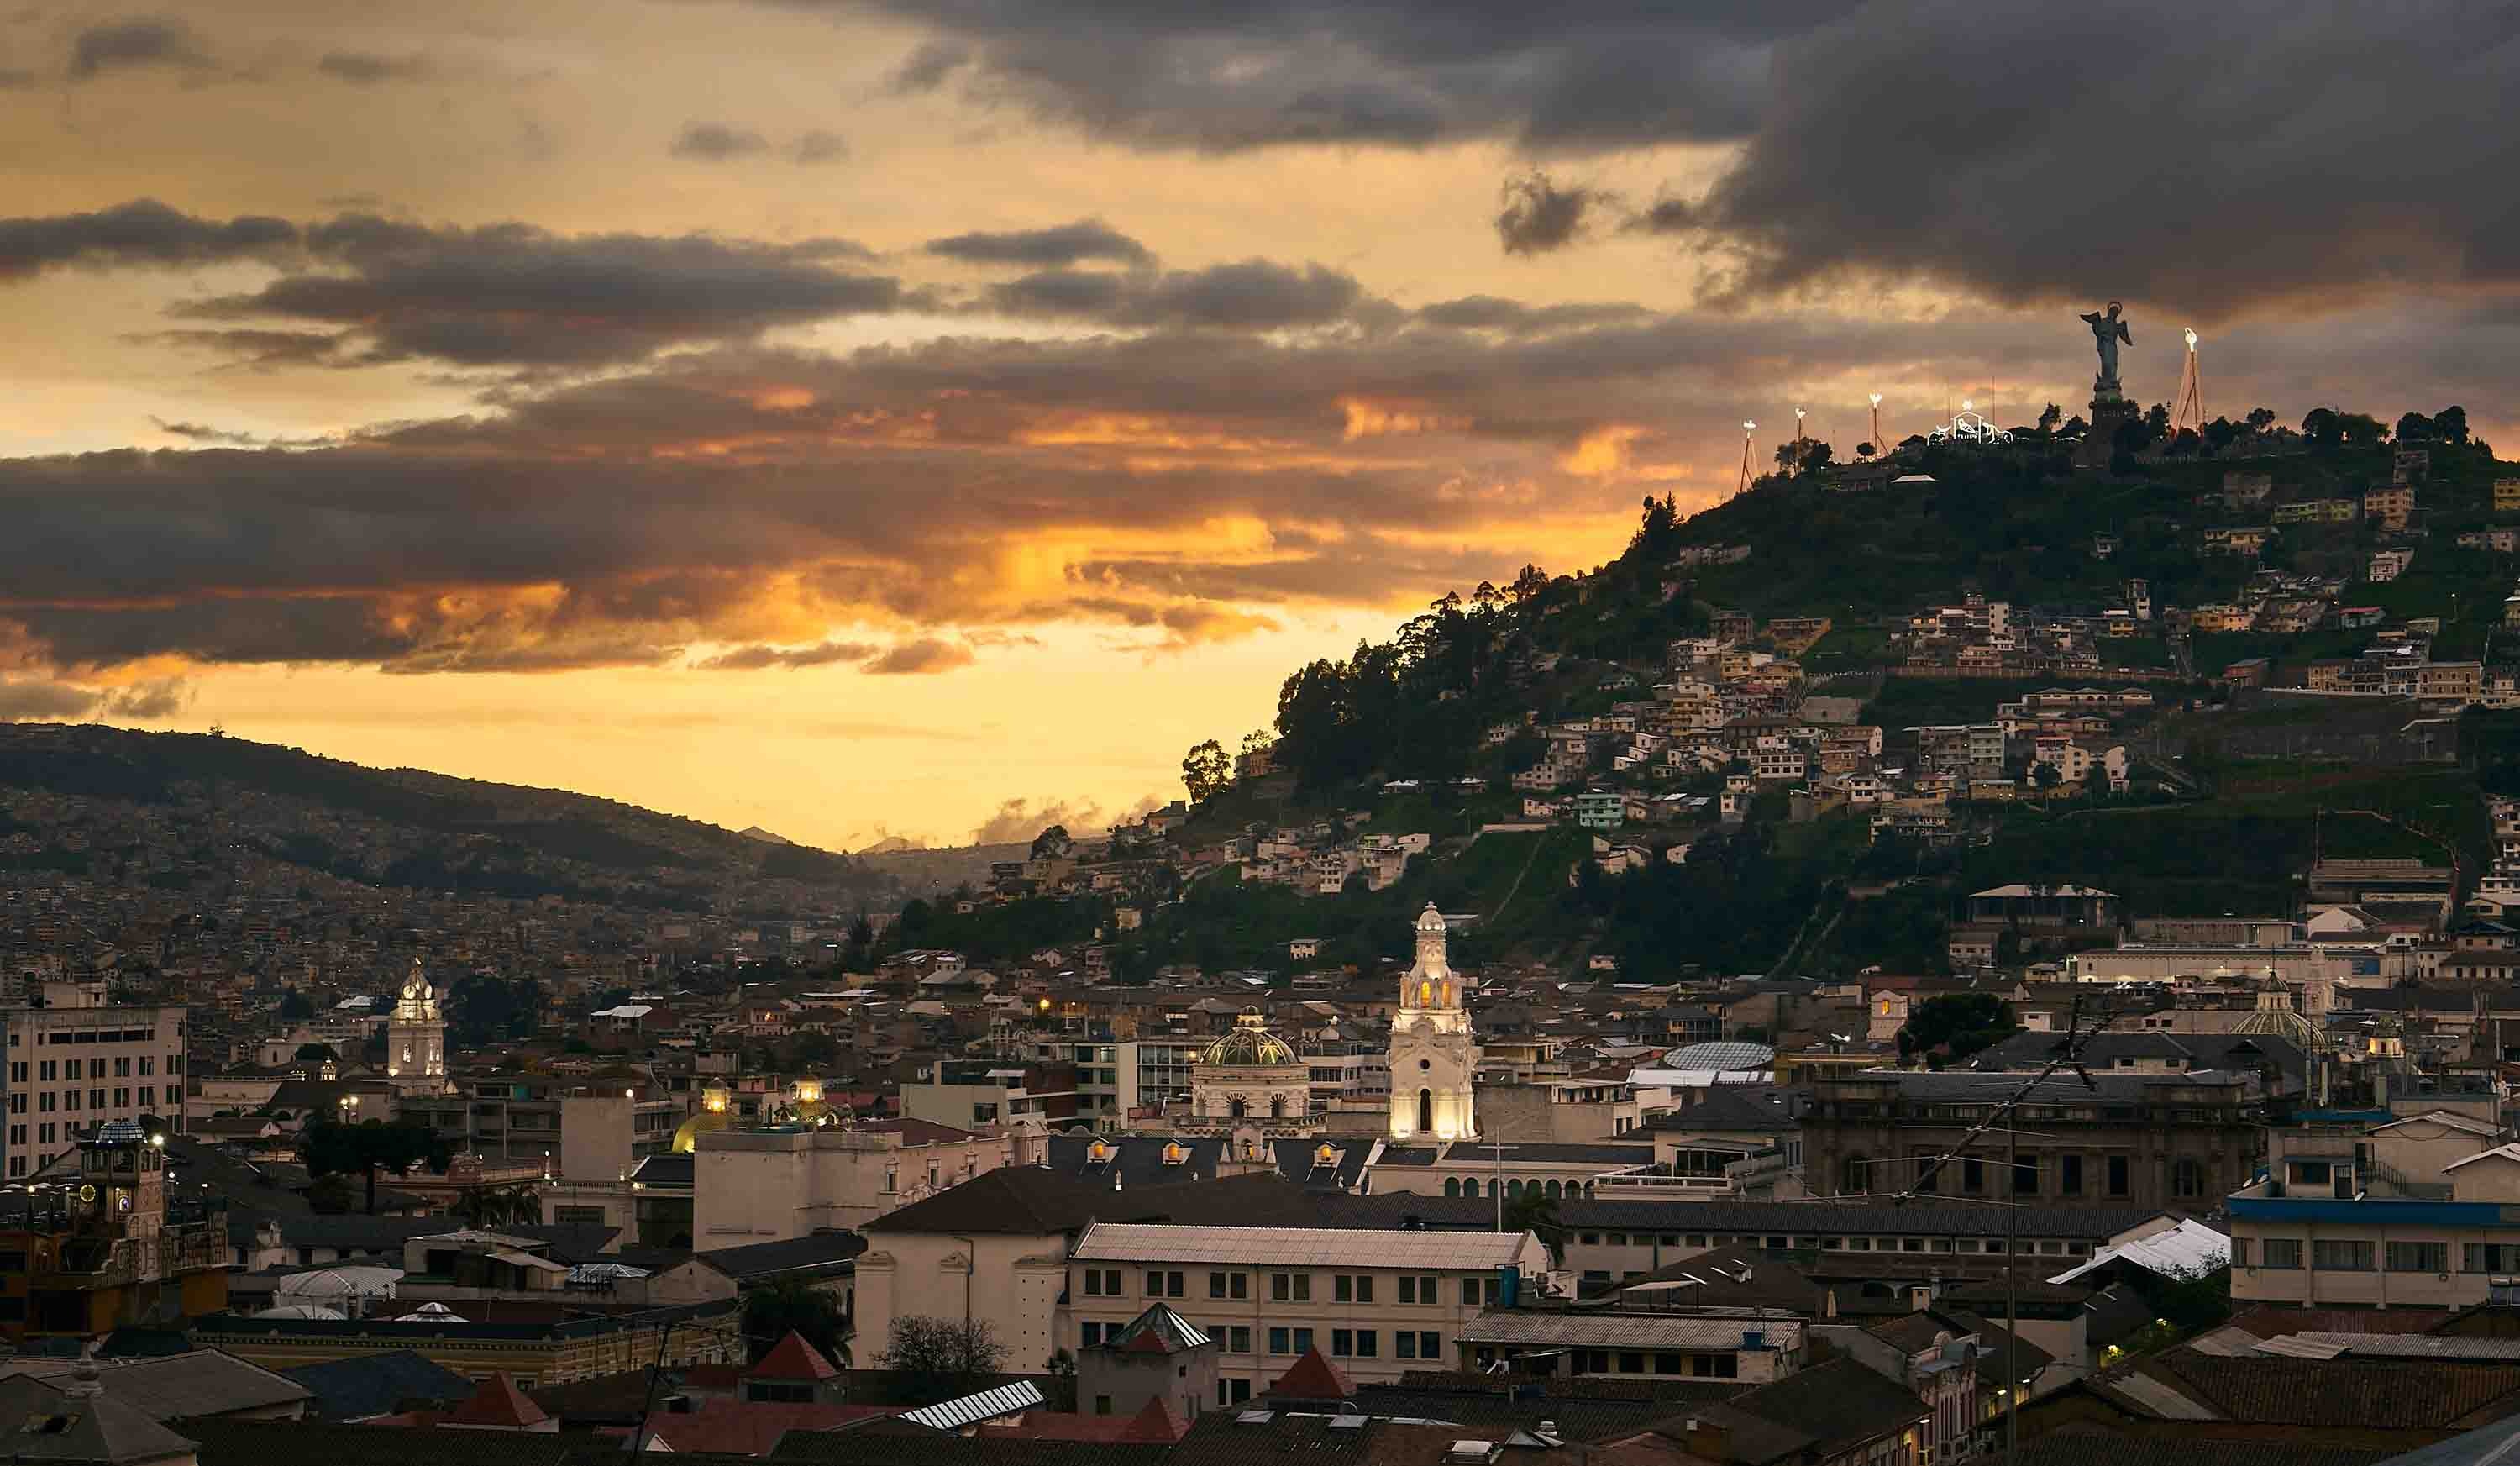 Quito around